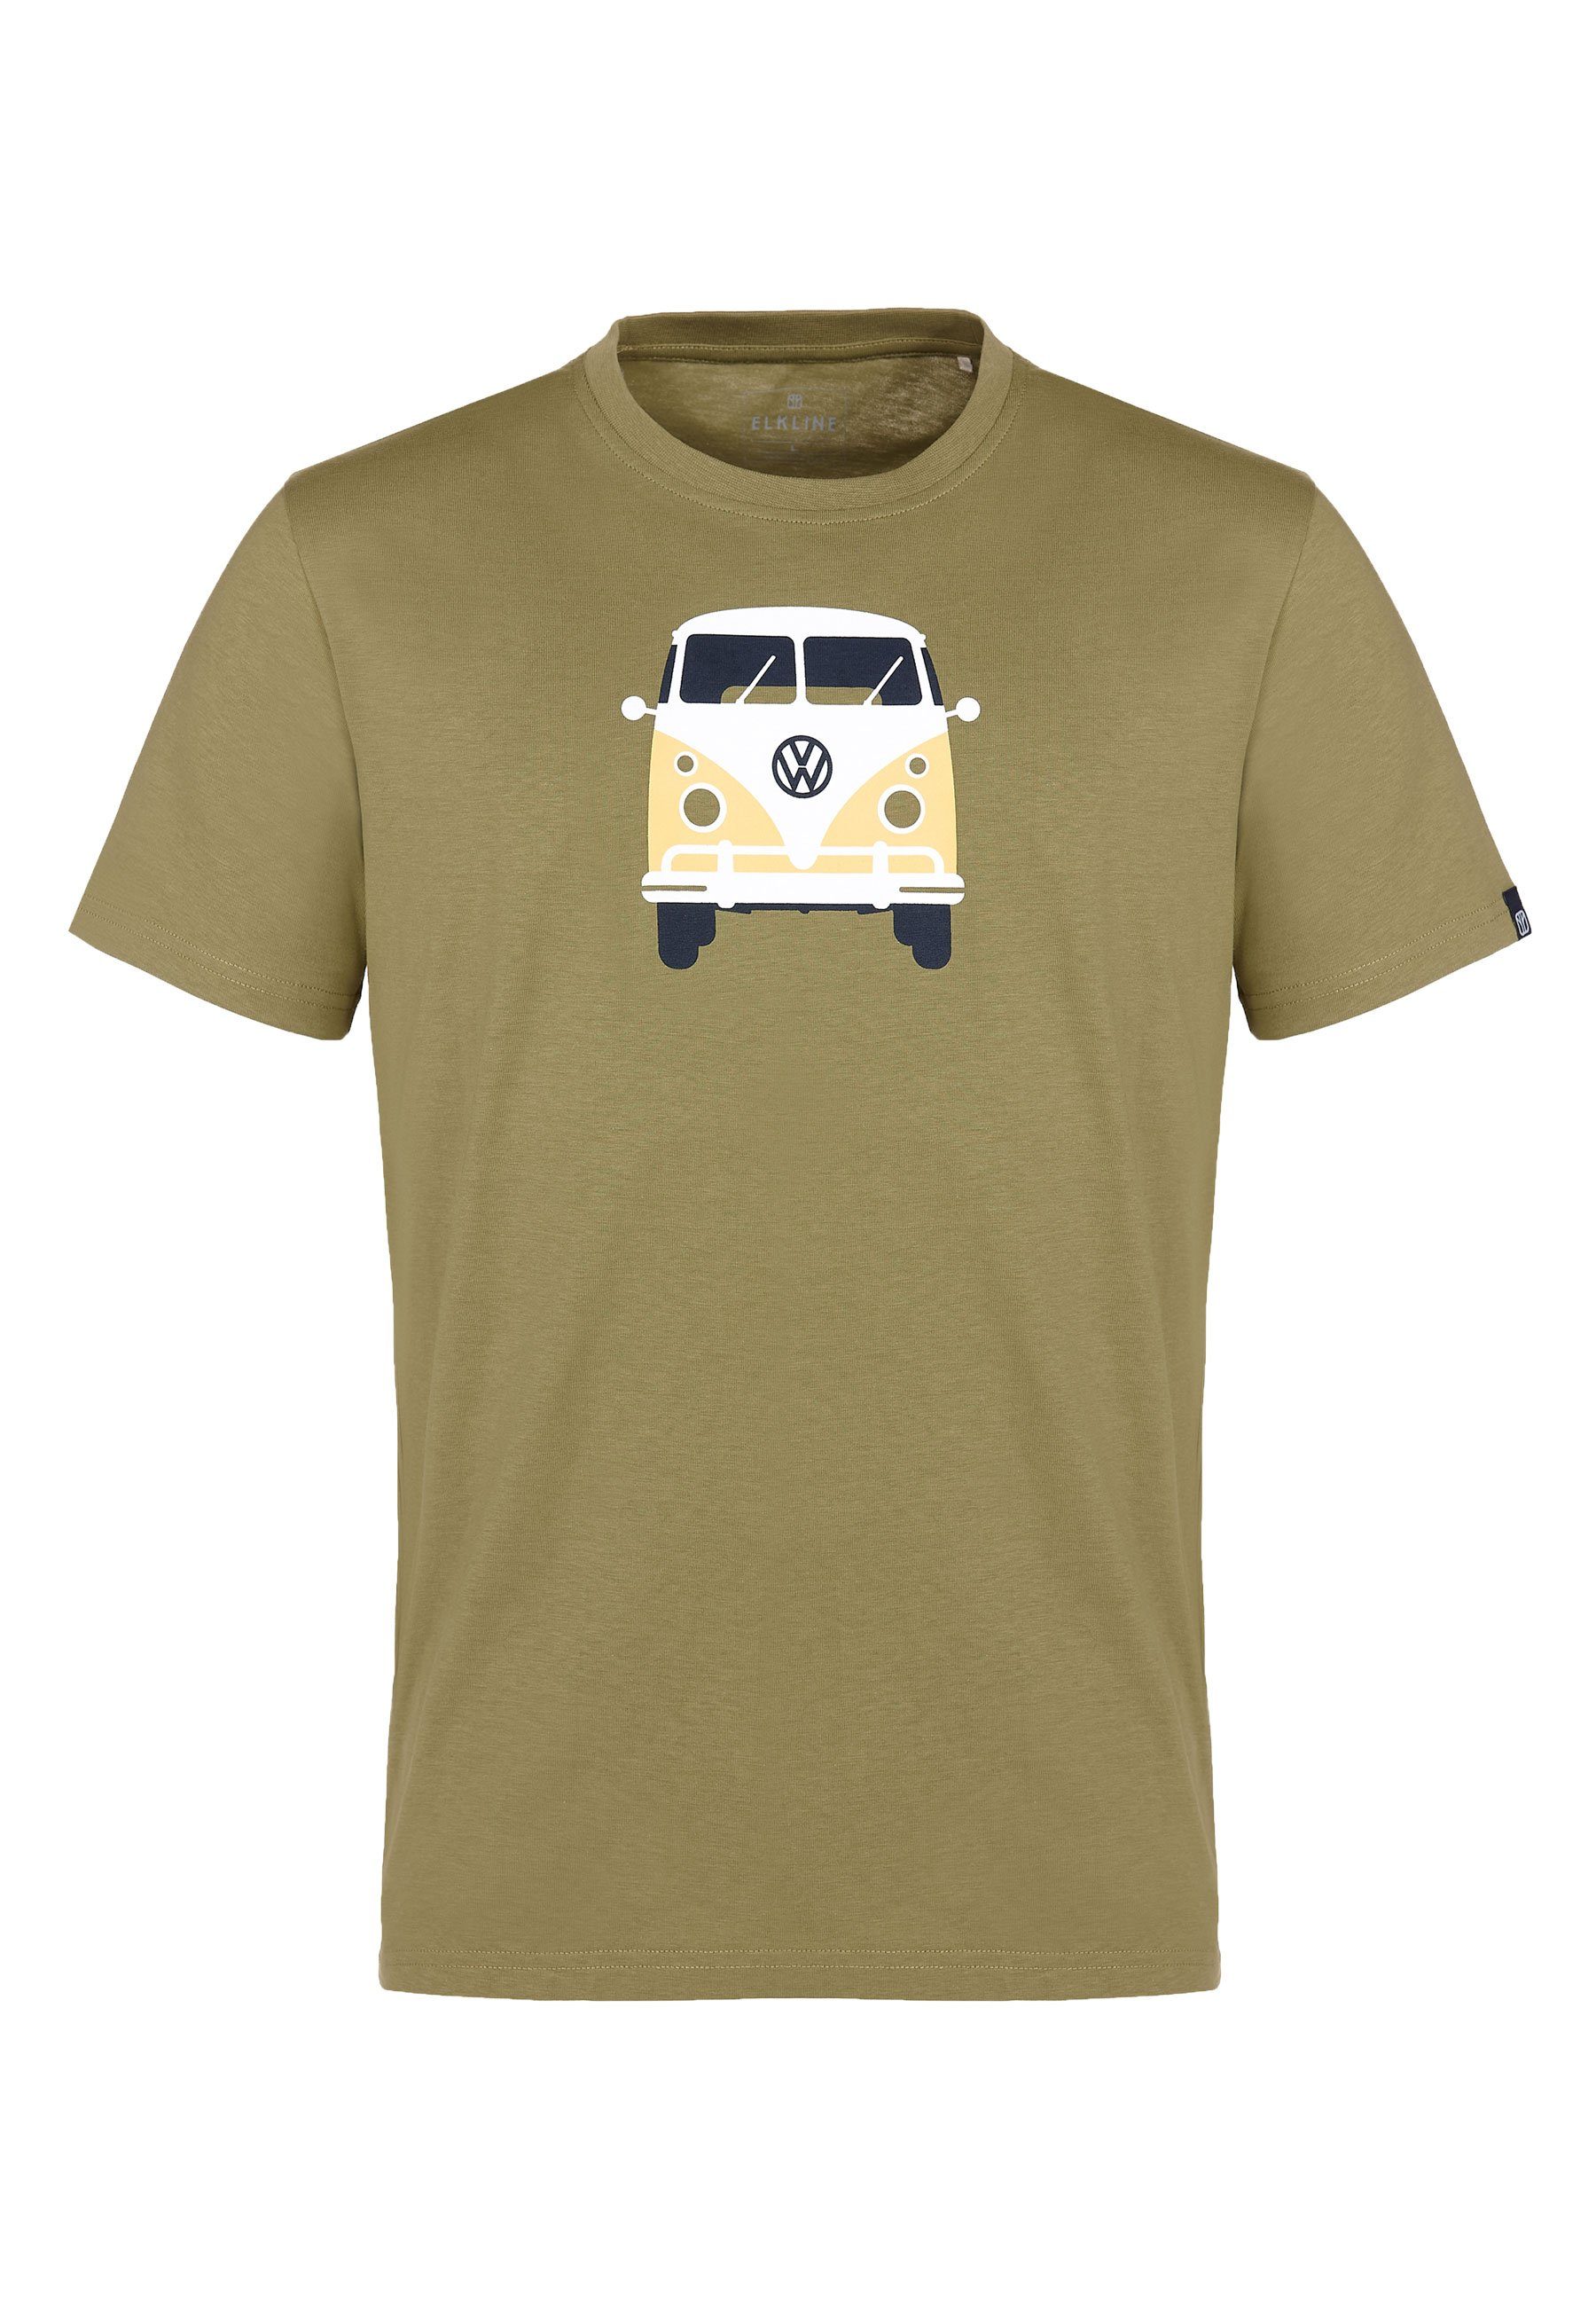 Rücken Brust Bulli Methusalem avocado VW Print Elkline lizenzierter T-Shirt